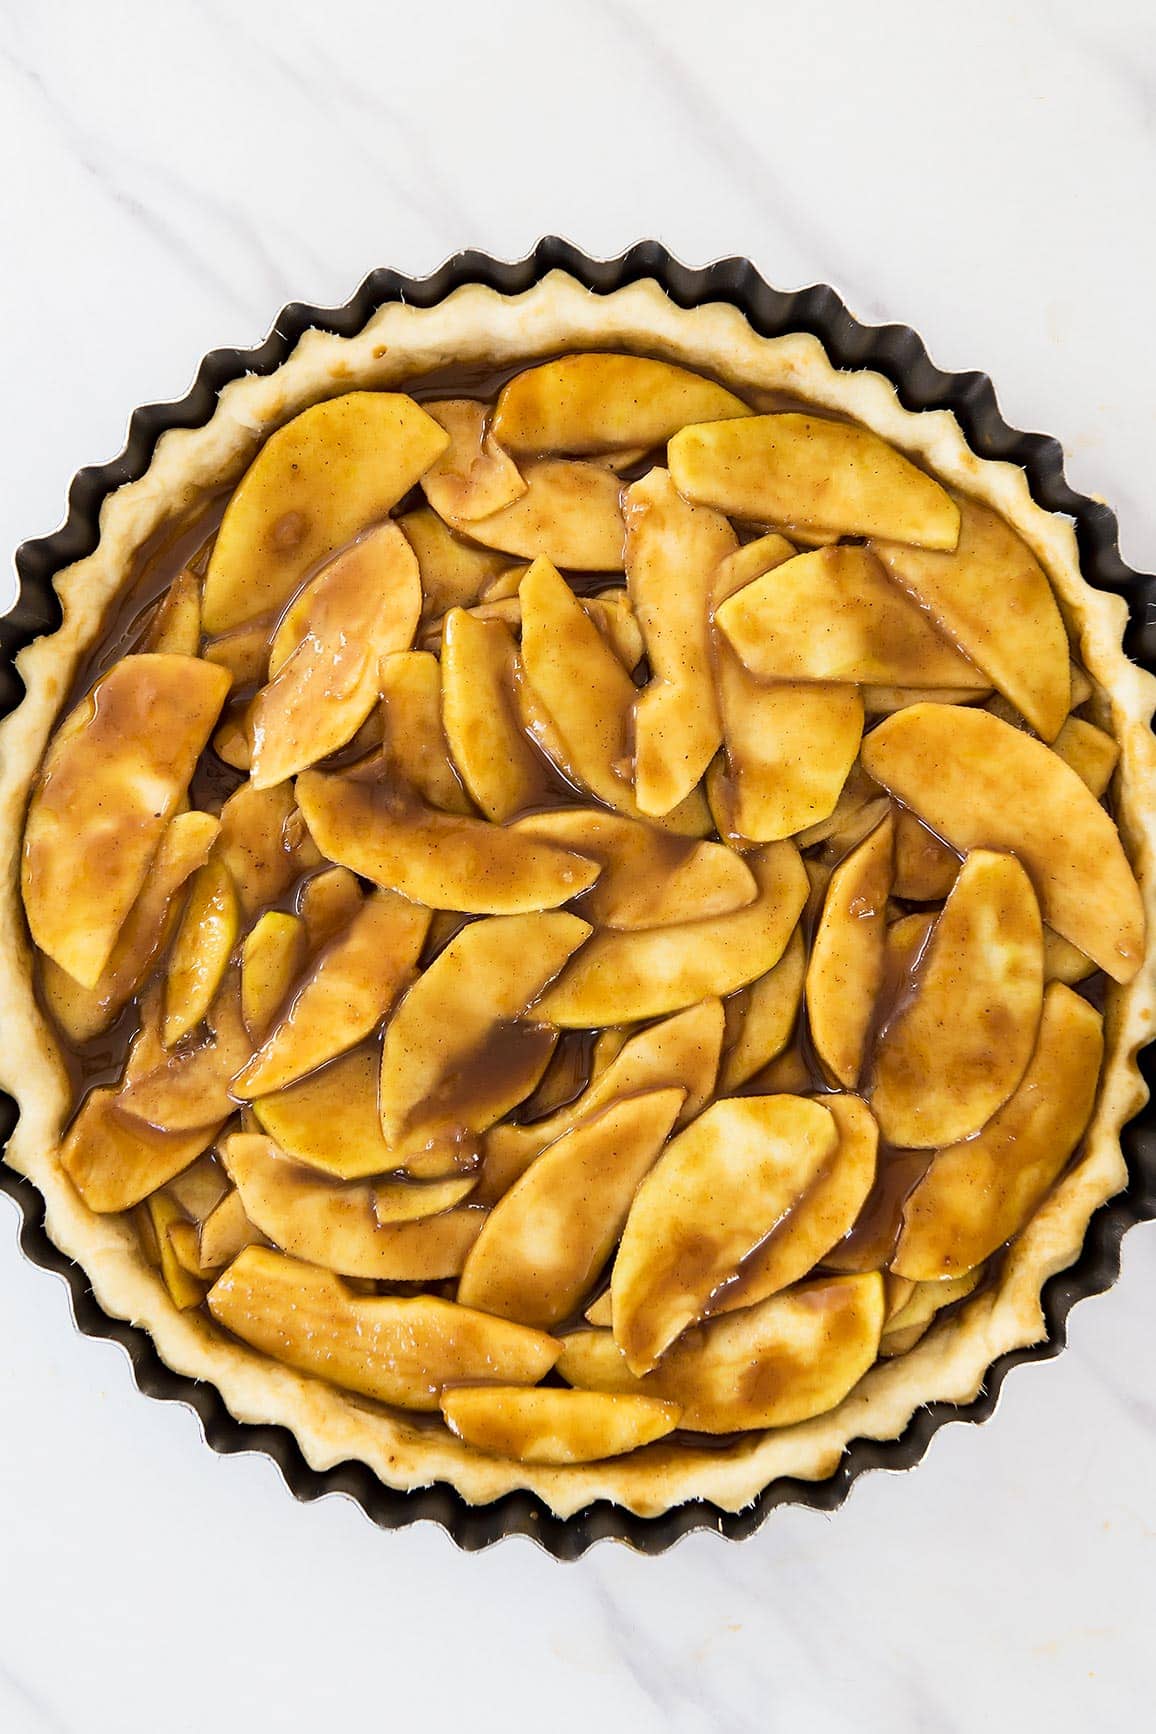 Apple Pie FIlling in pie crust